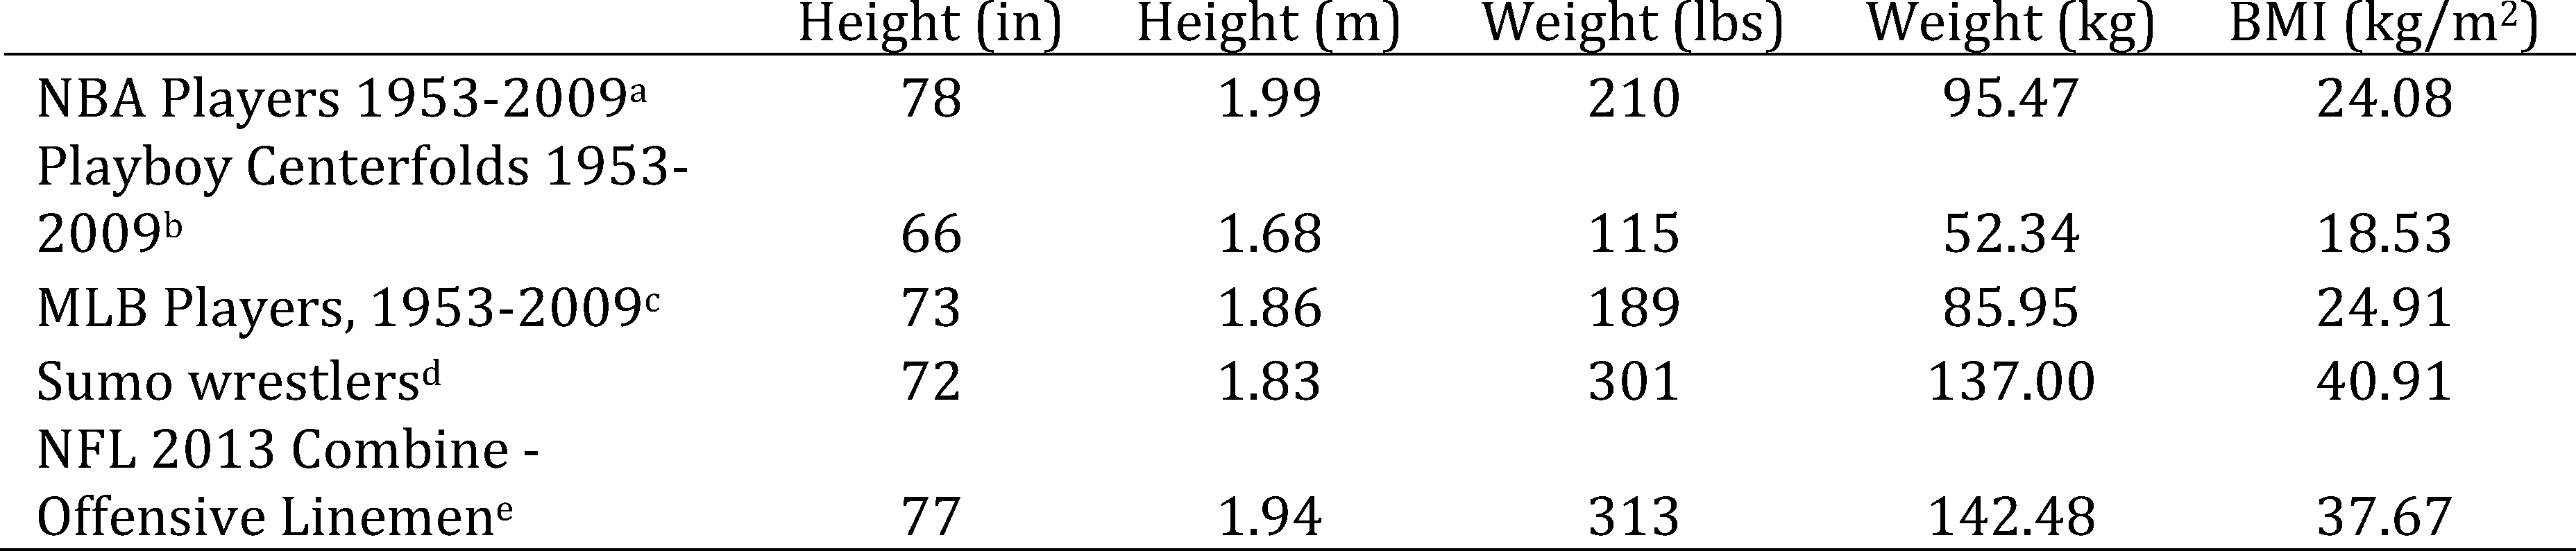 BMI examples